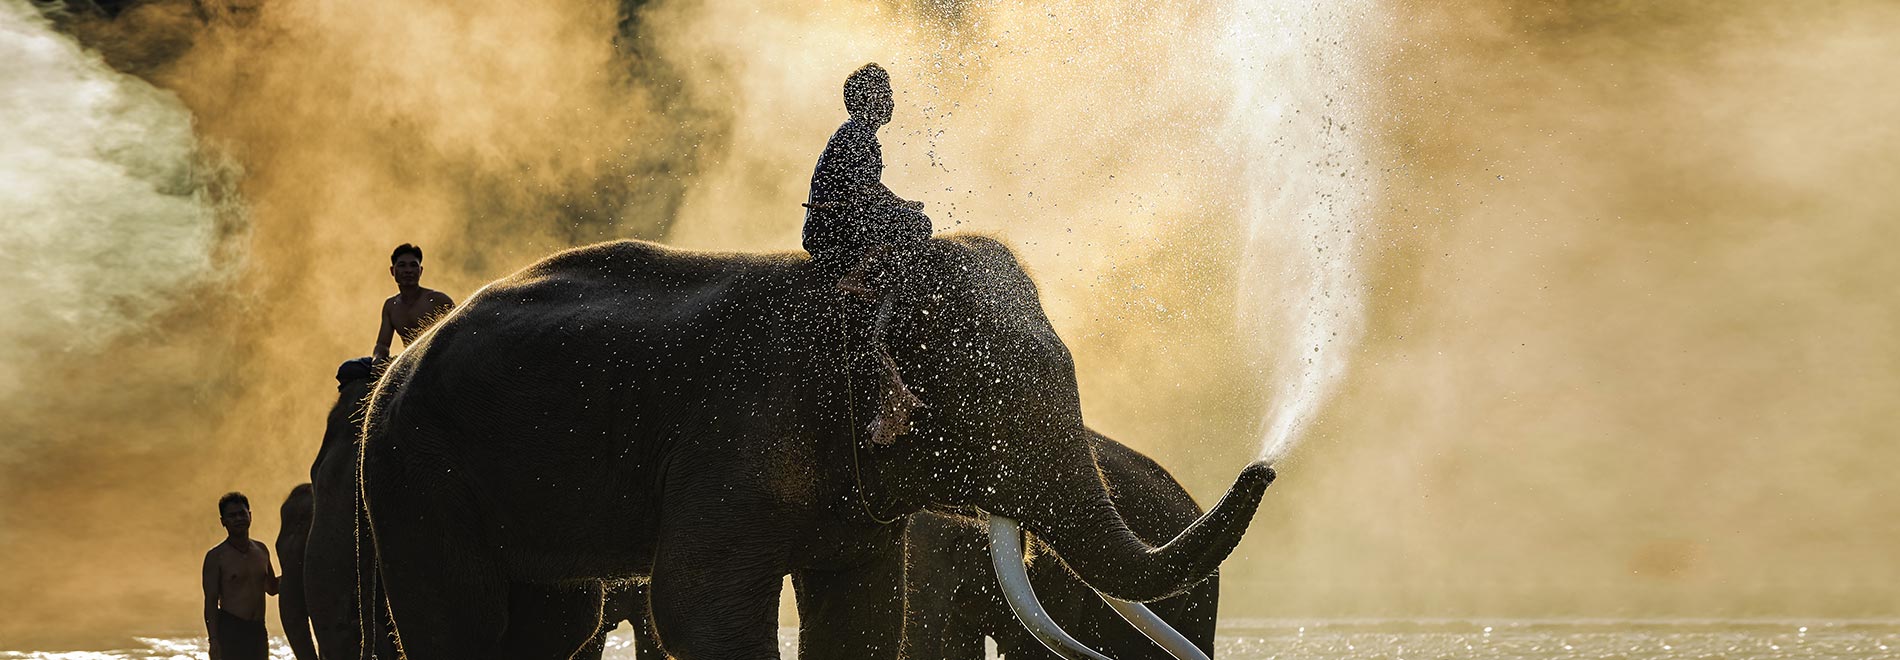 Elephant Safari | OutdoorKeeda